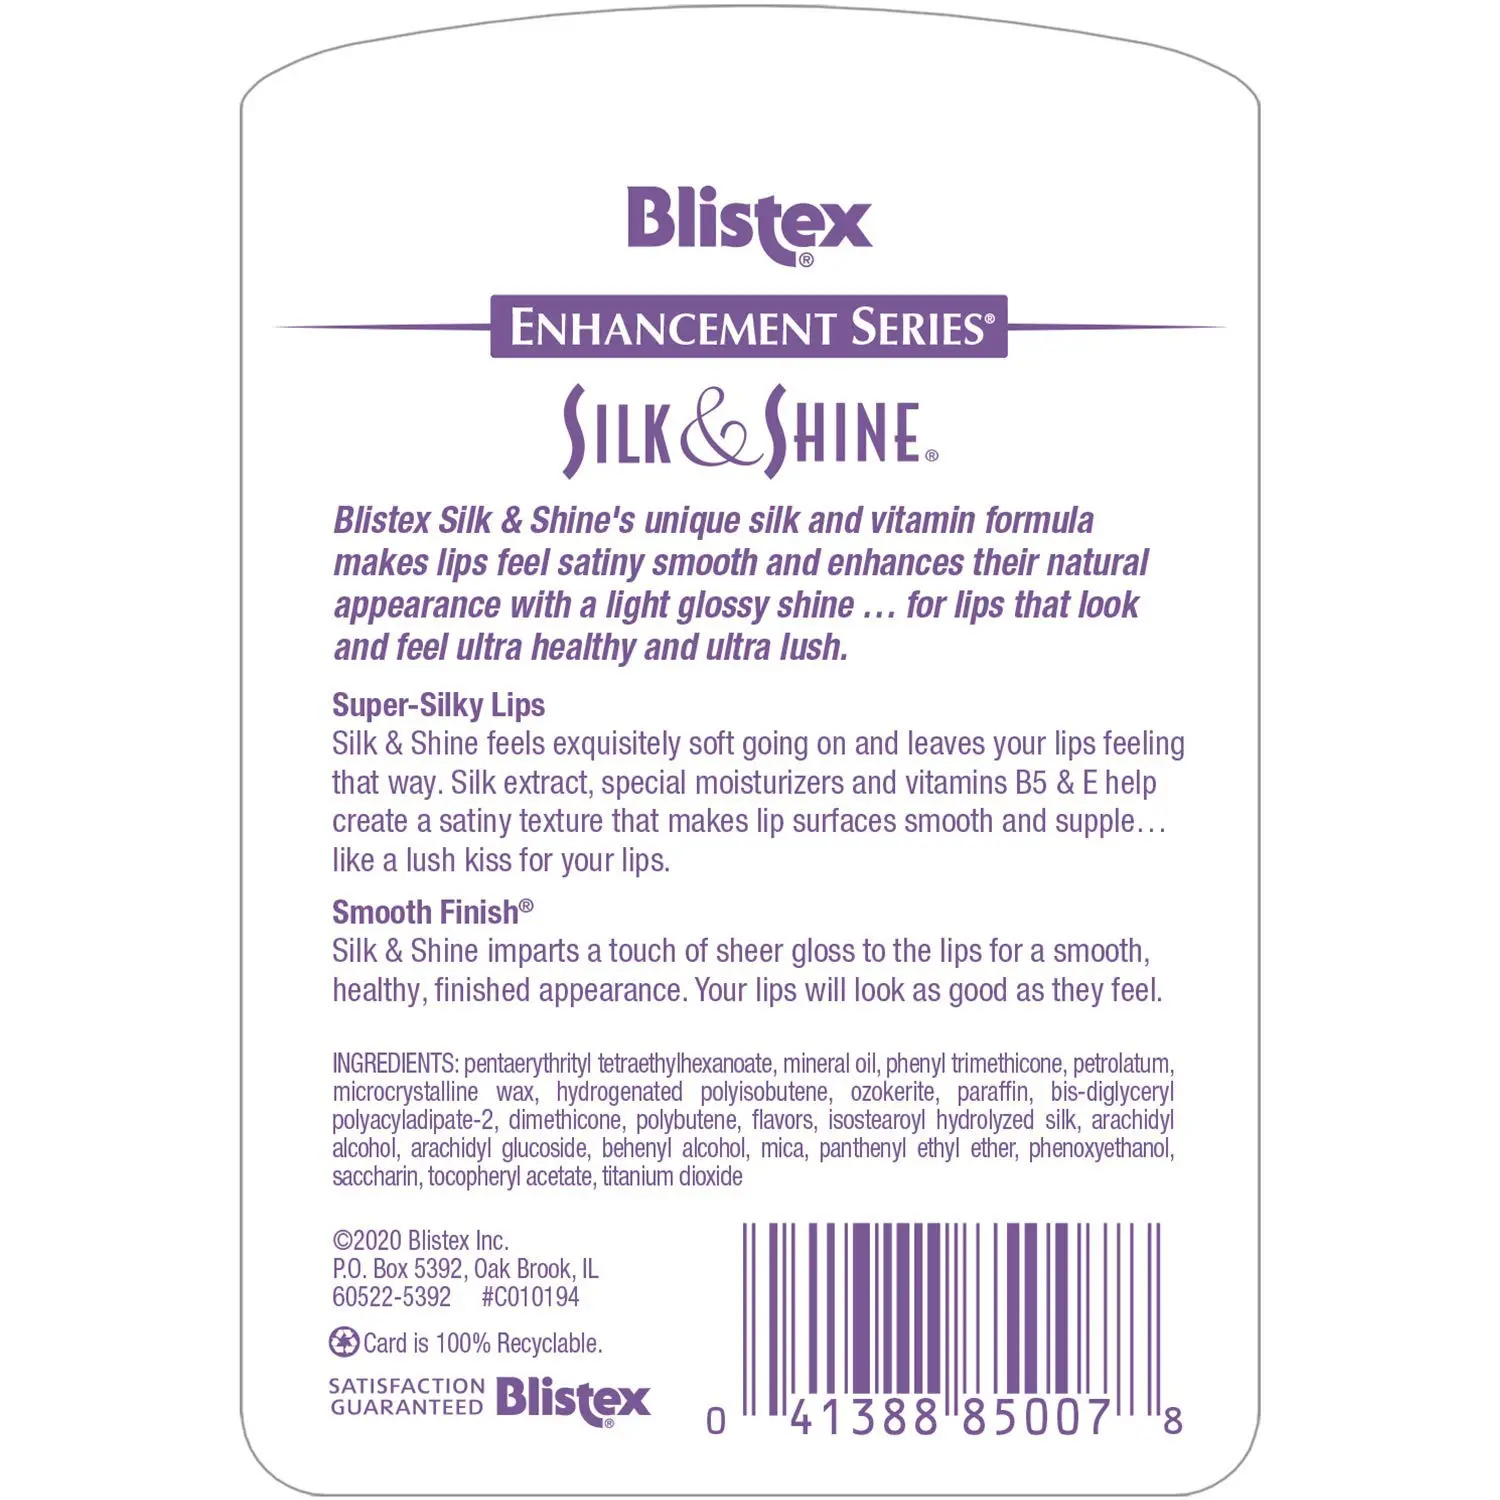 Blistex Silk Shine Lip Balm ingredients